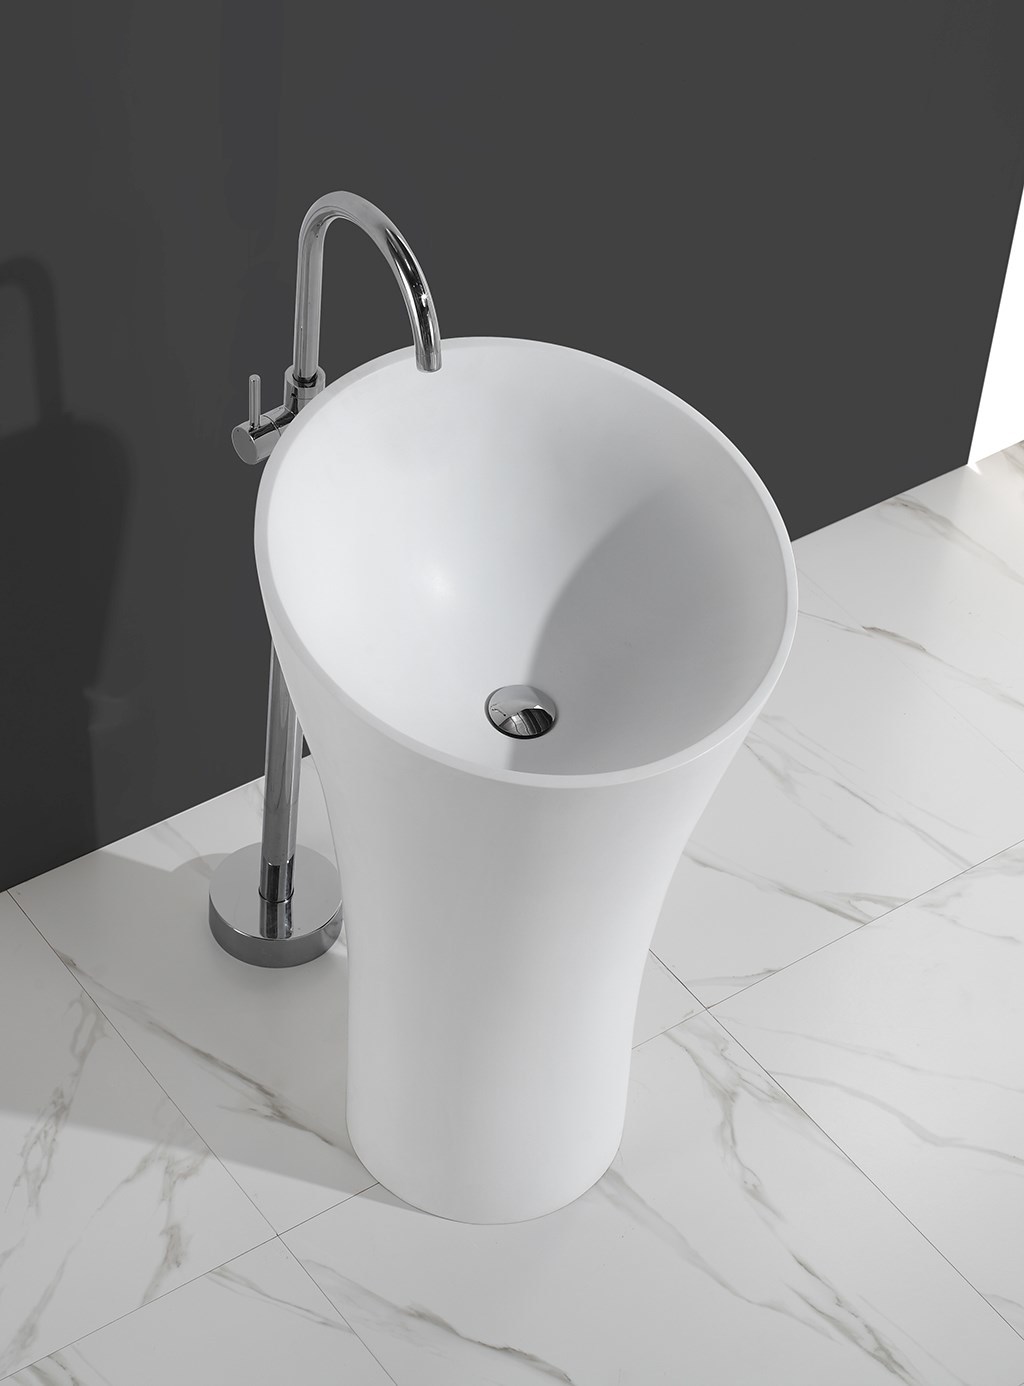 KingKonree Brand artificial solid basin custom bathroom free standing basins